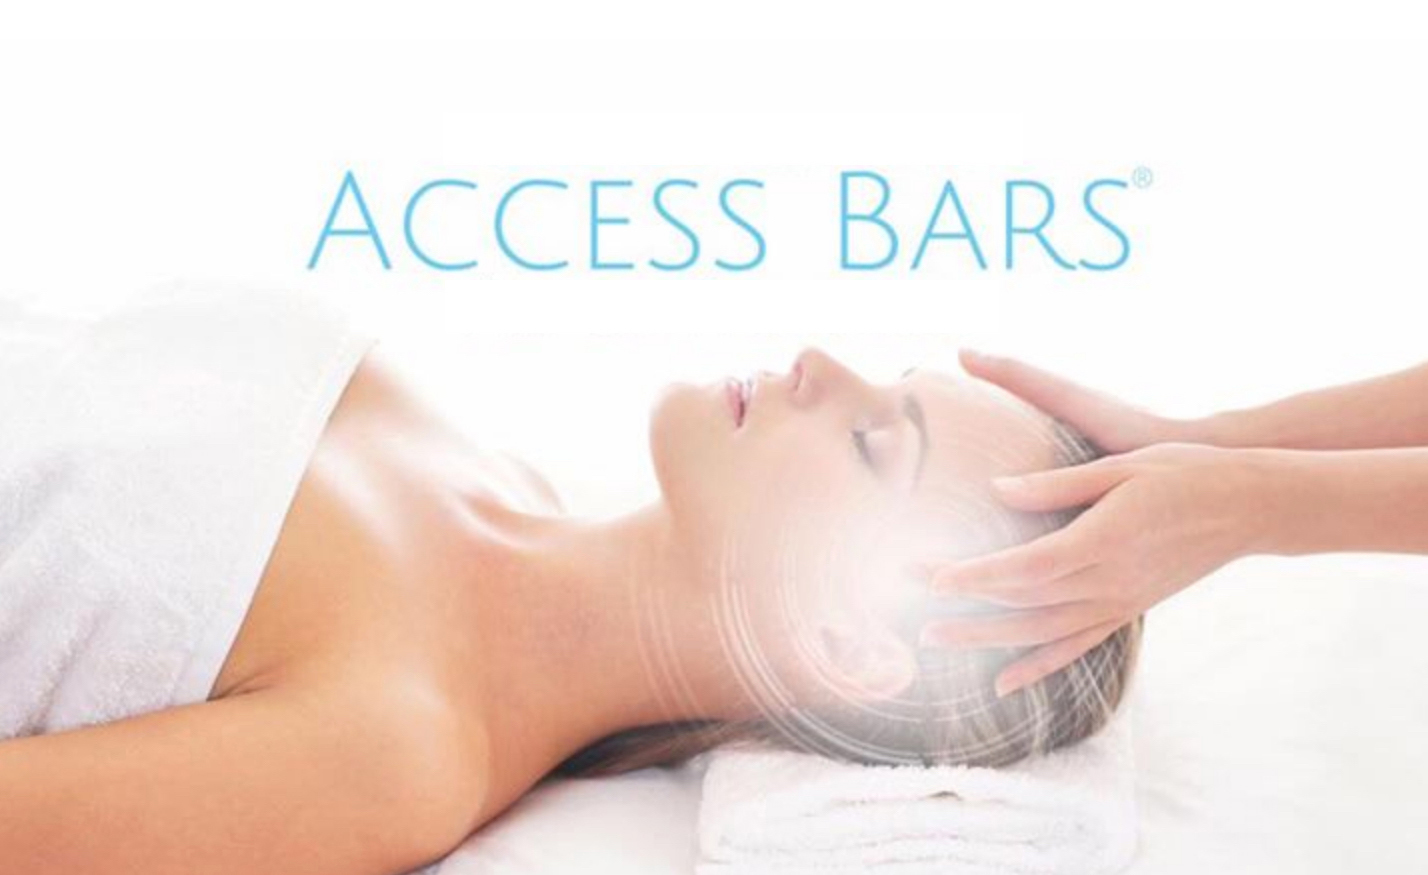 Access Bars